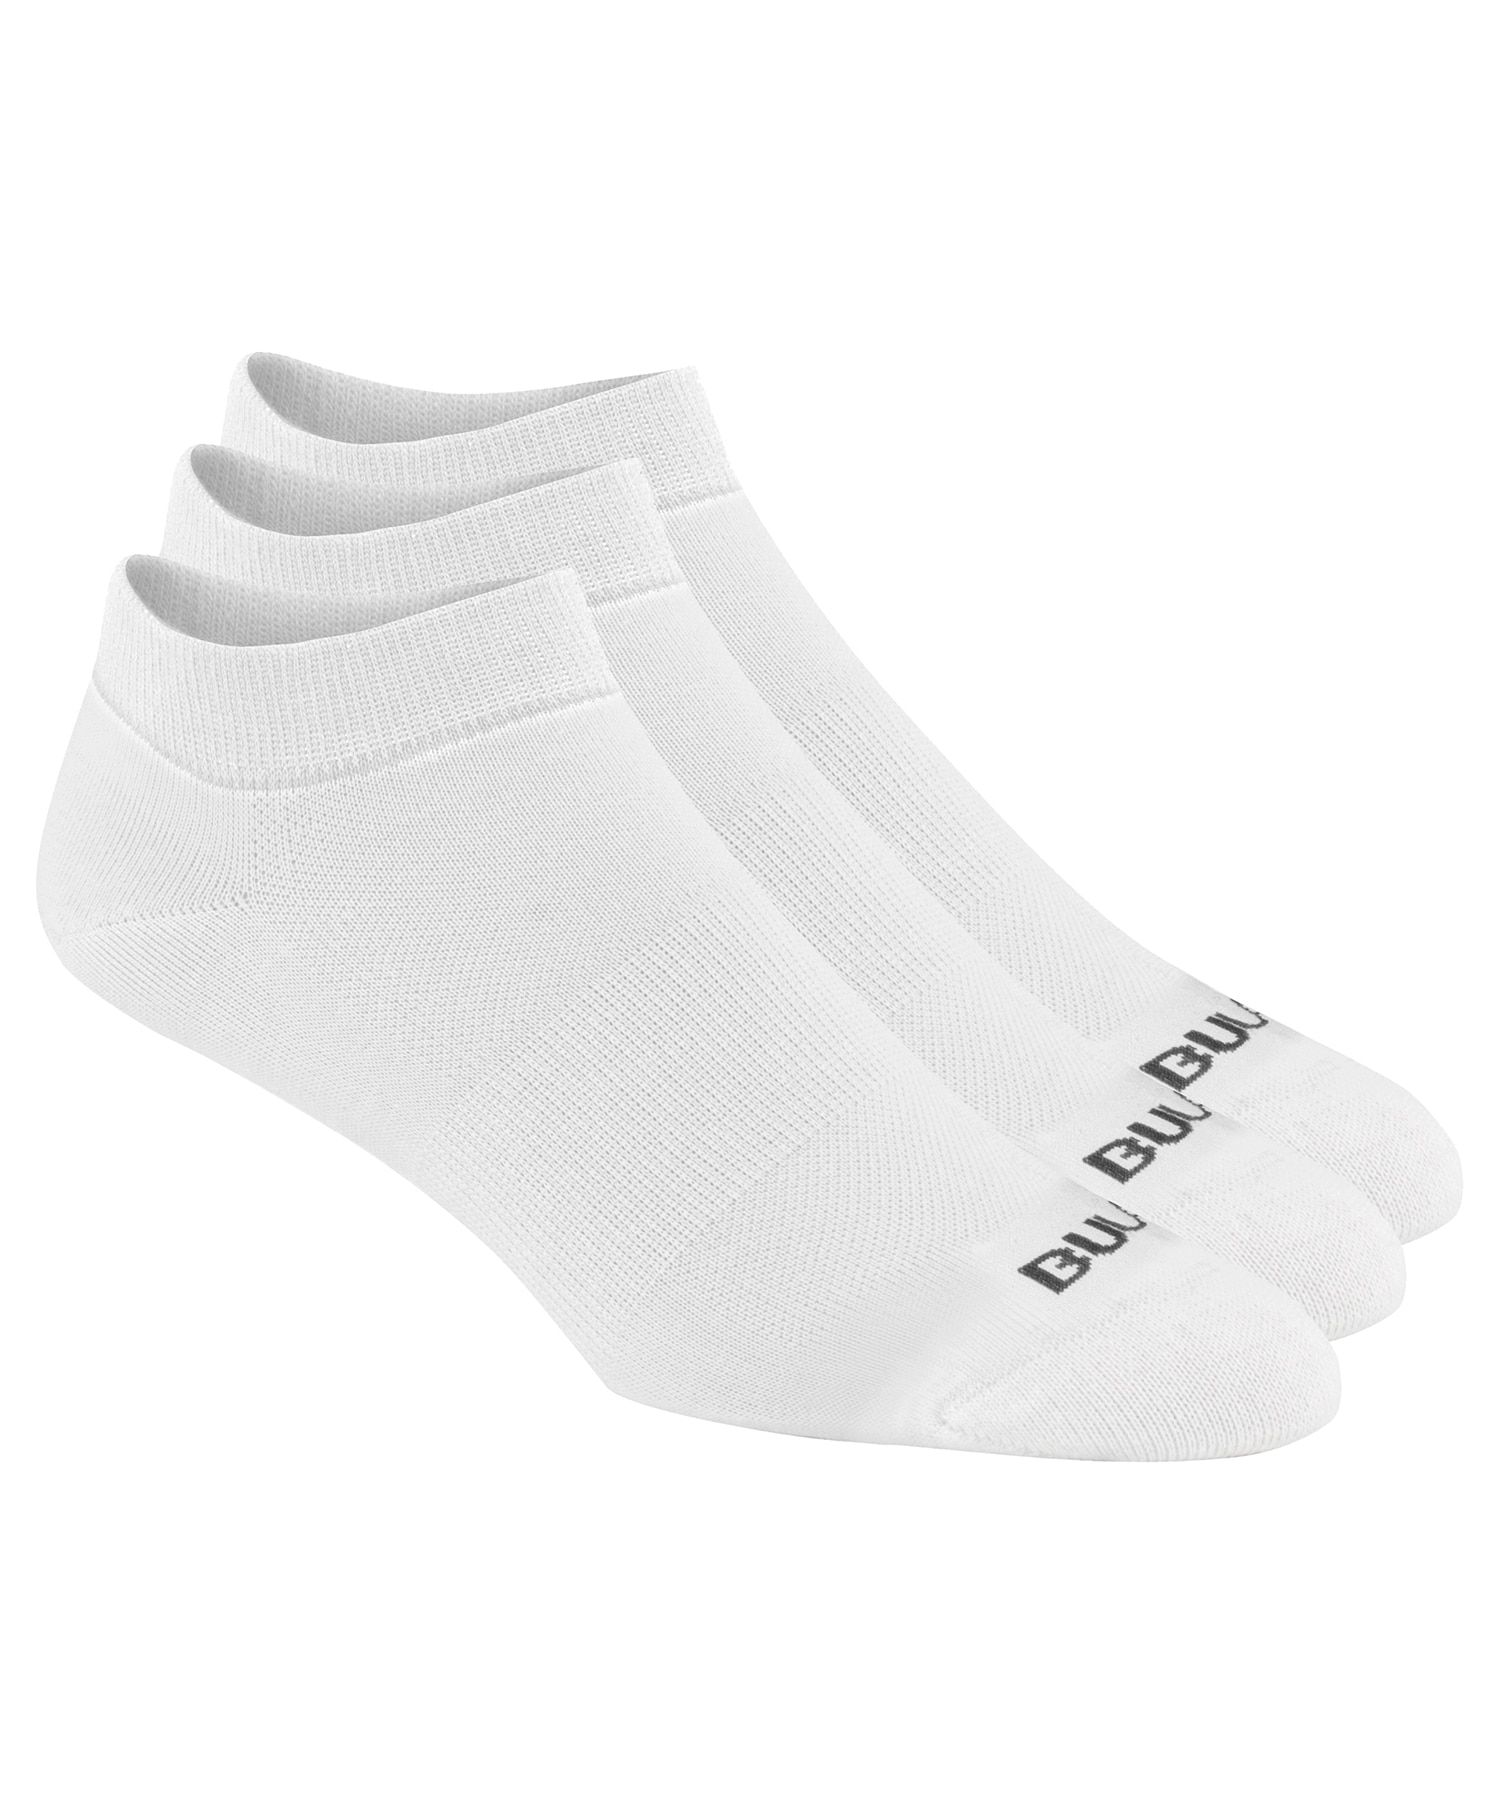 Bula Safe socks 3pk